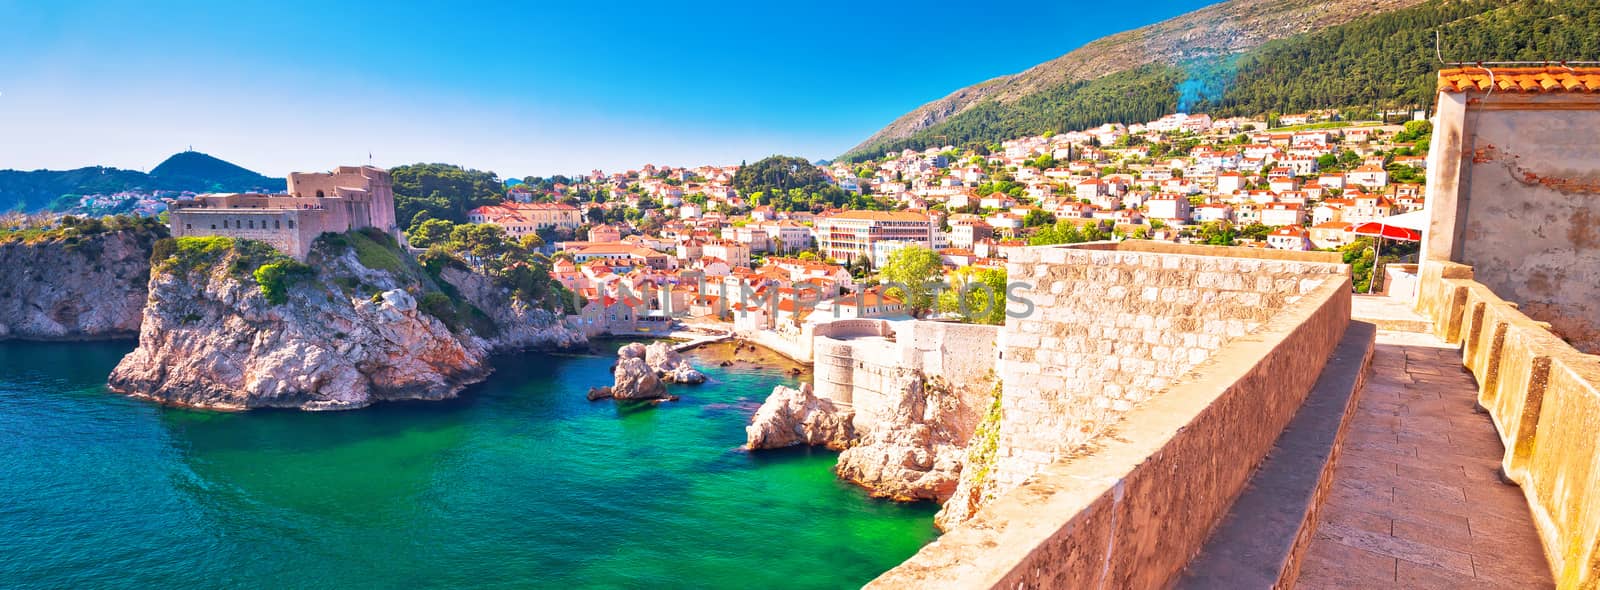 Dubrovnik bay and historic walls panoramic view, tourist destination in Dalmatia, Croatia